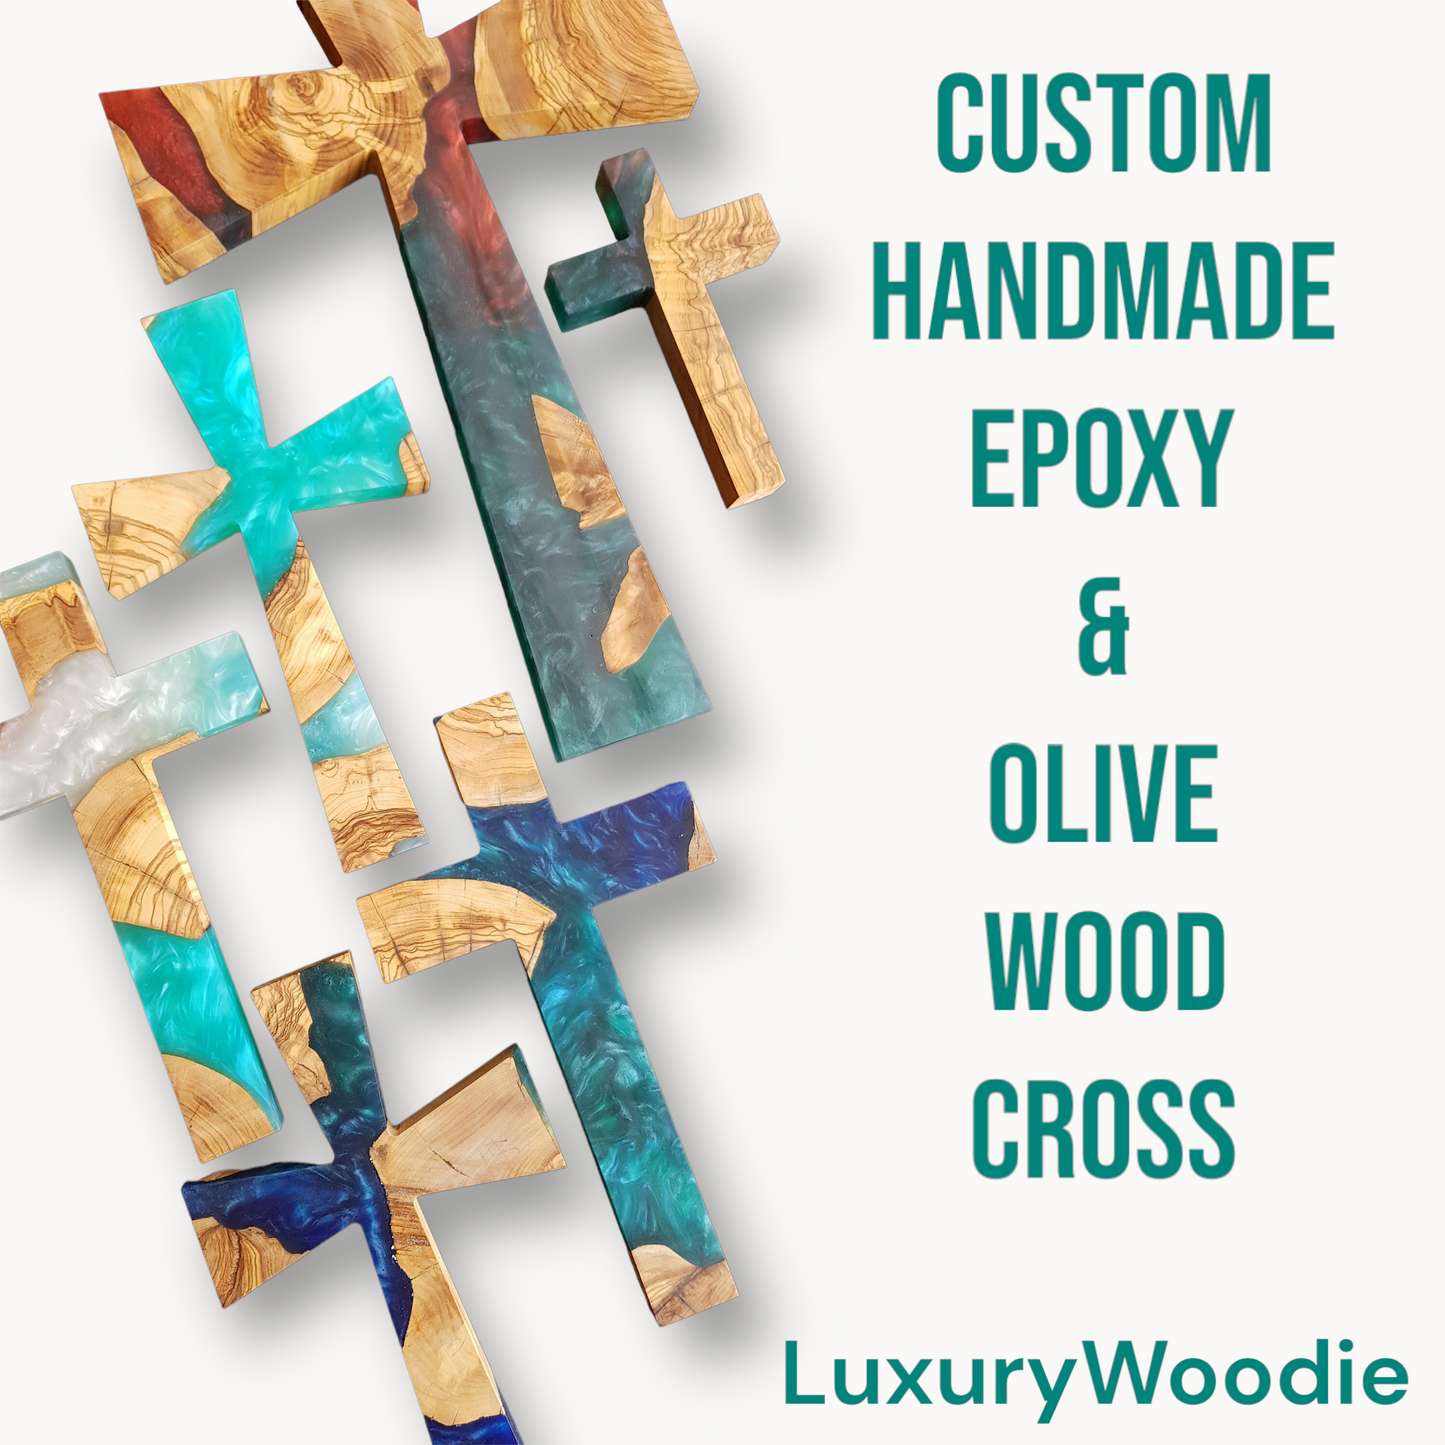 Large Handmade Wooden Cross